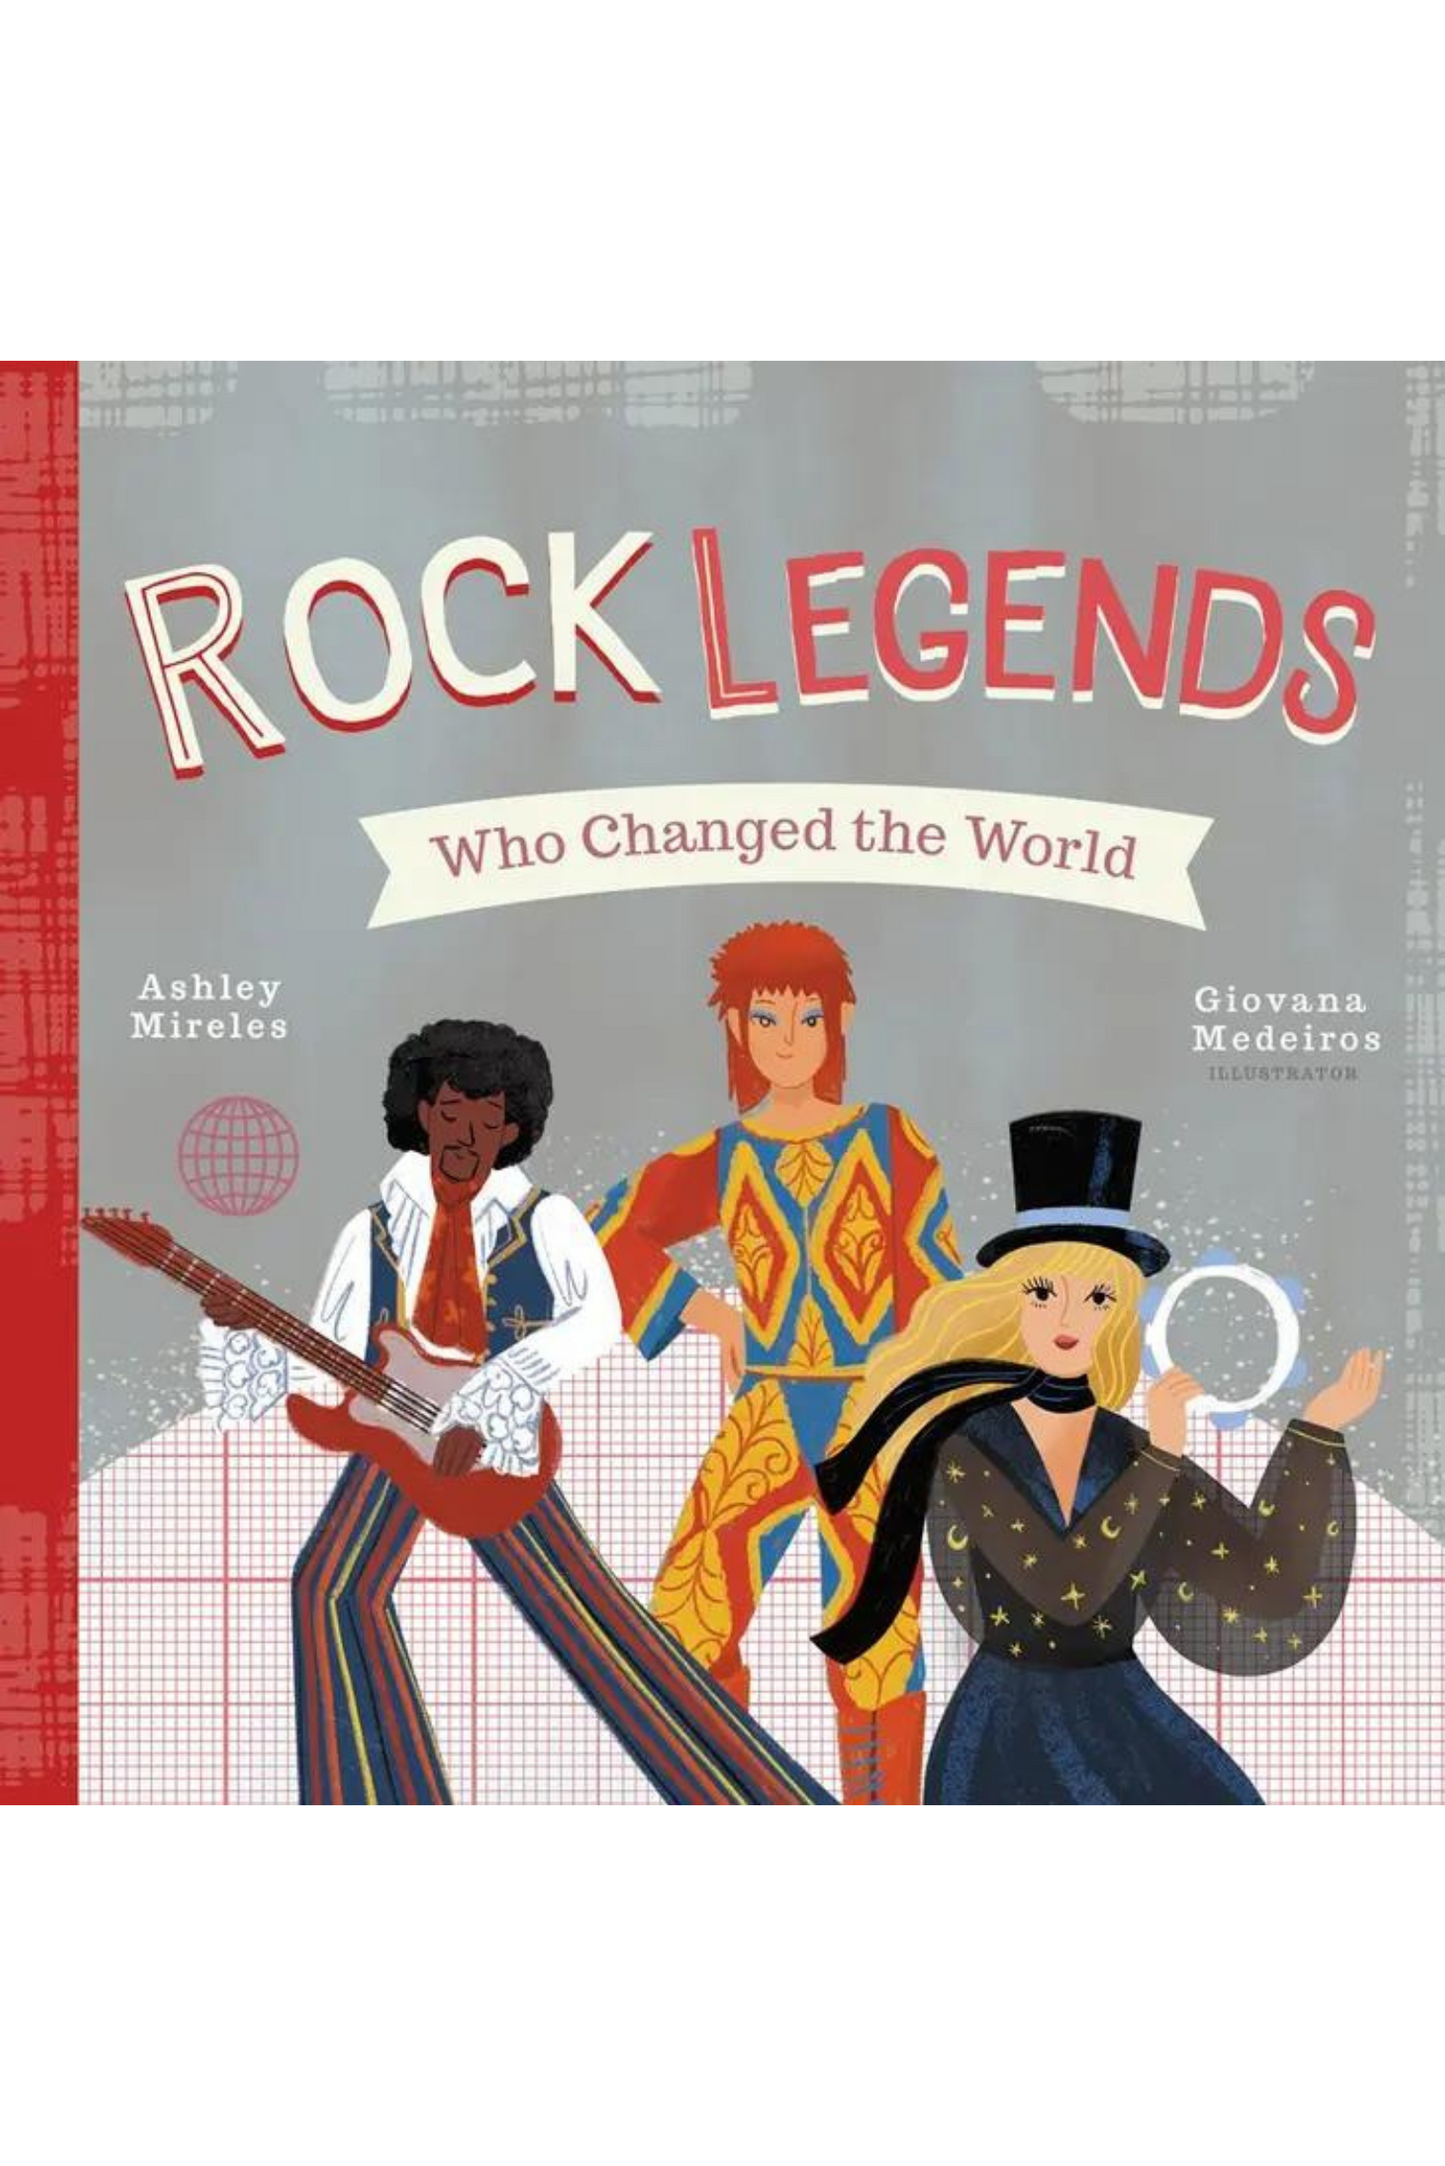 Rock Legends Book